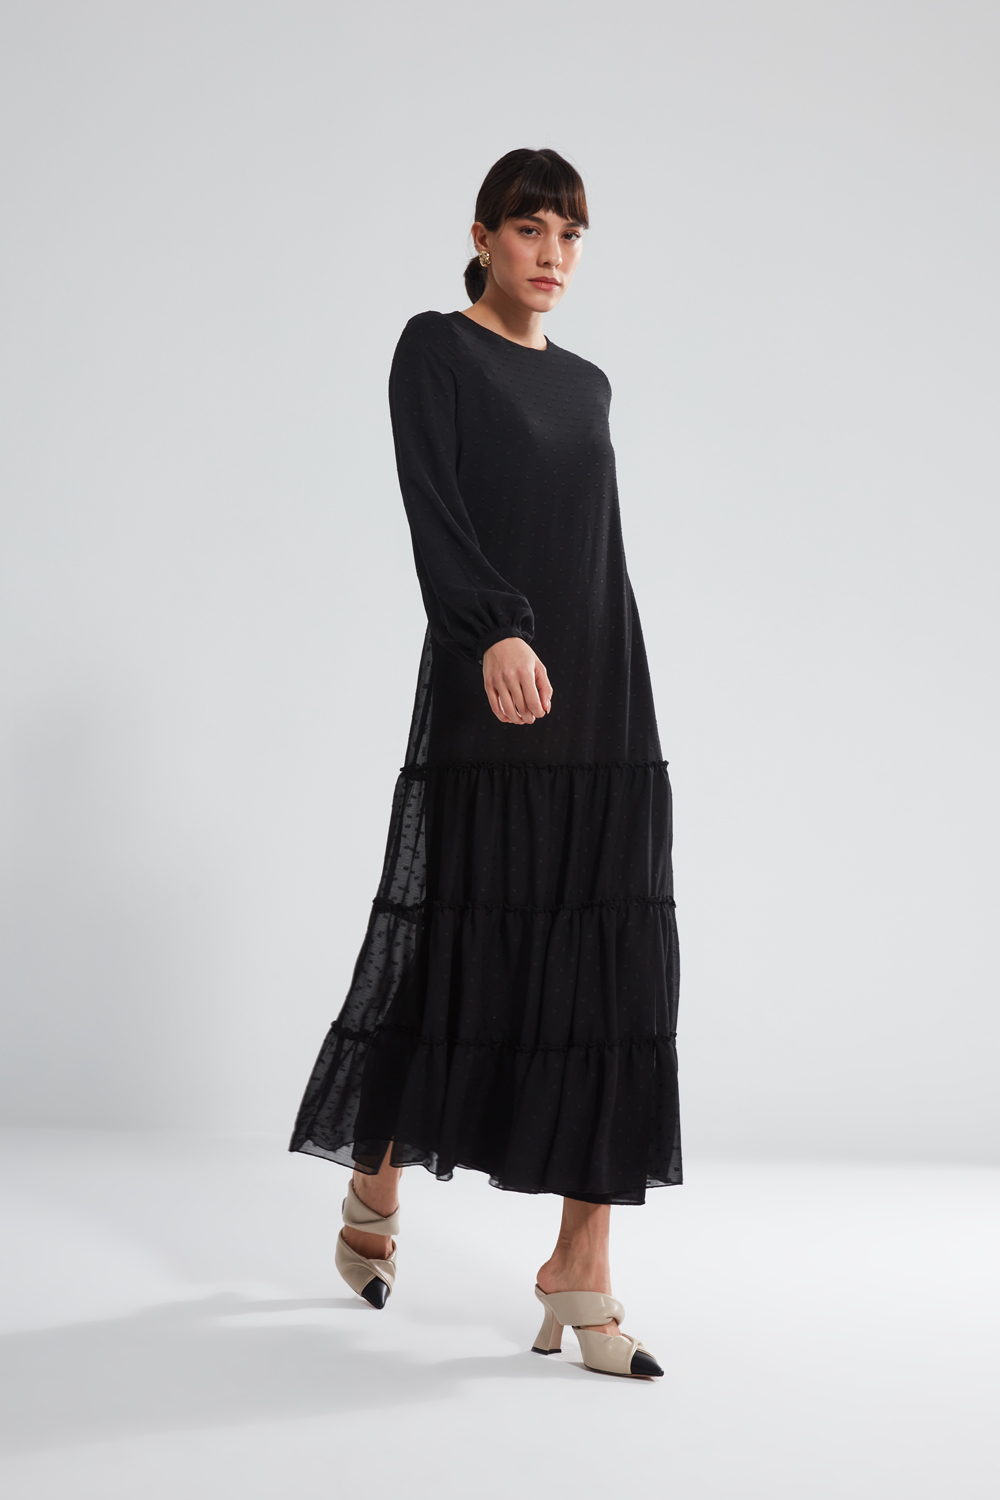 Black Maxi Dress With Ruffle Bottom Skirt